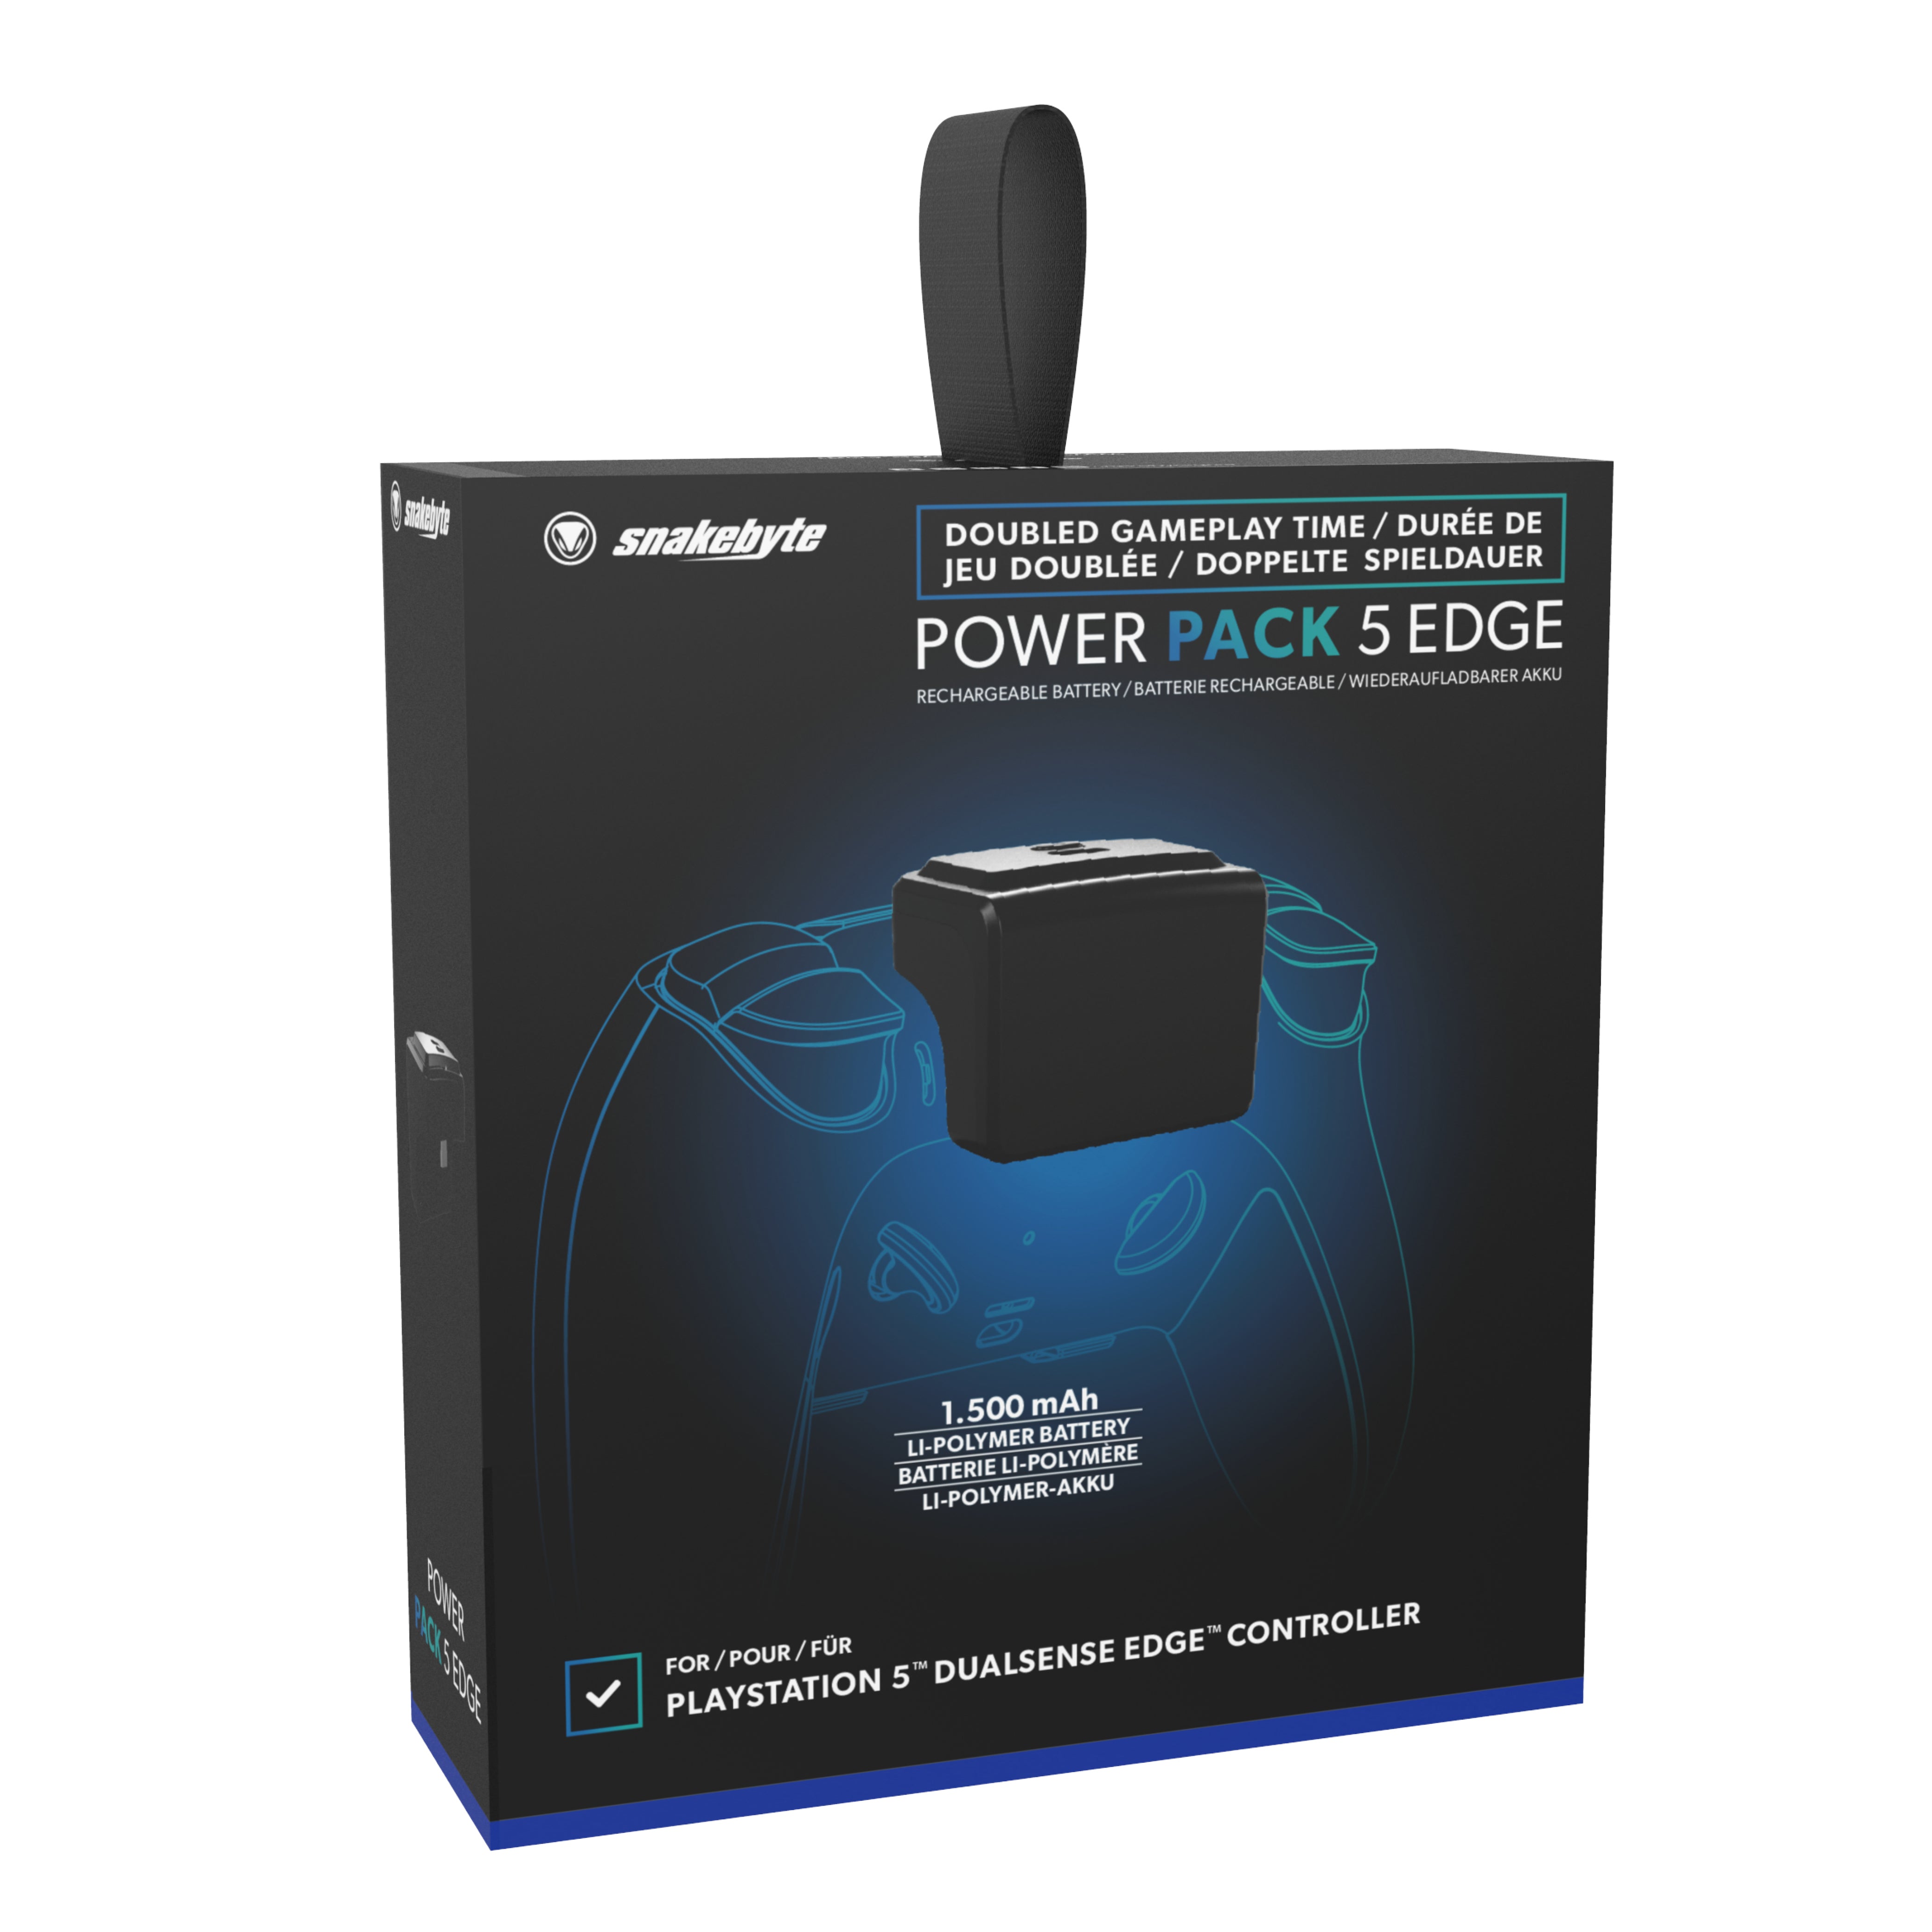 POWER PACK 5 EDGE (MediaMarkt / Saturn Exclusive)